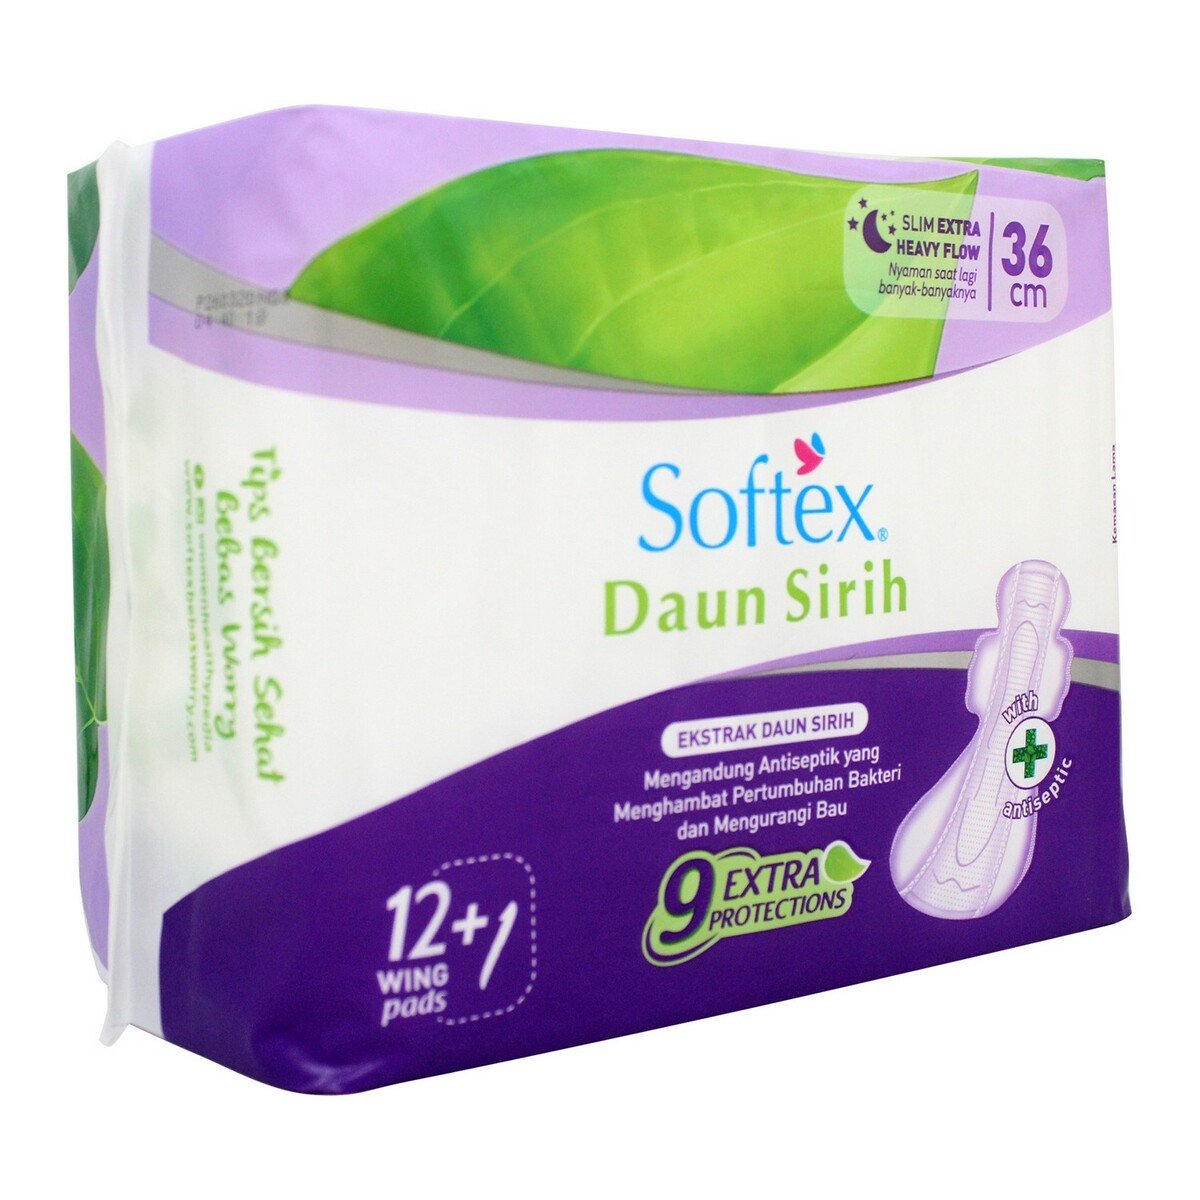 Softex Daun Sirih Slim 36cm 12pcs